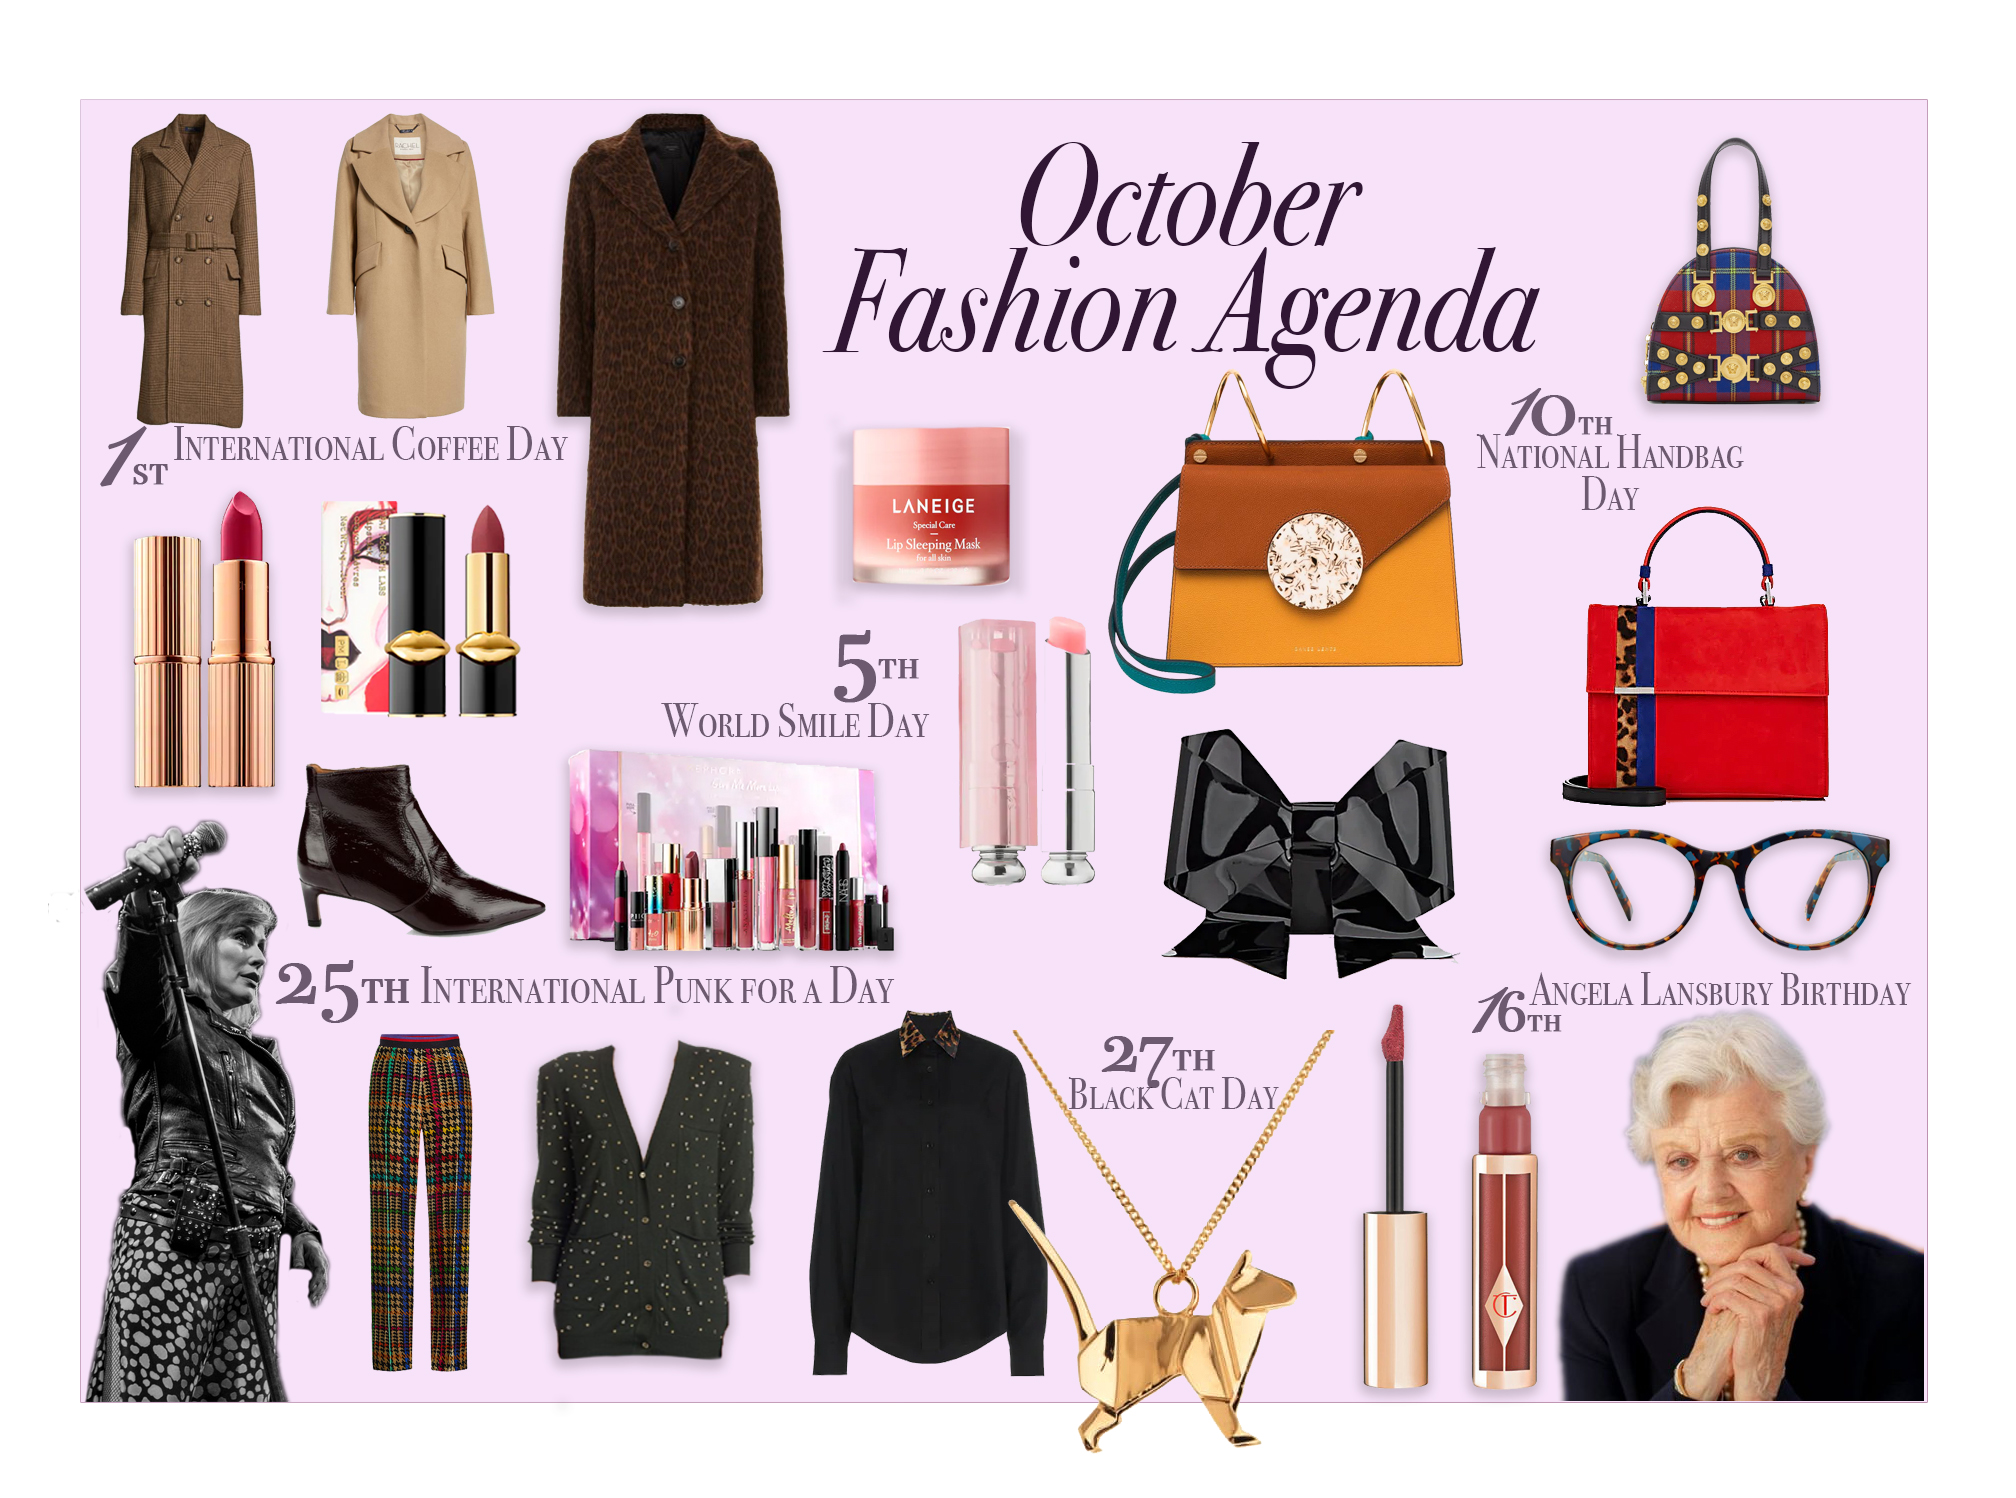 October Fashion Agenda